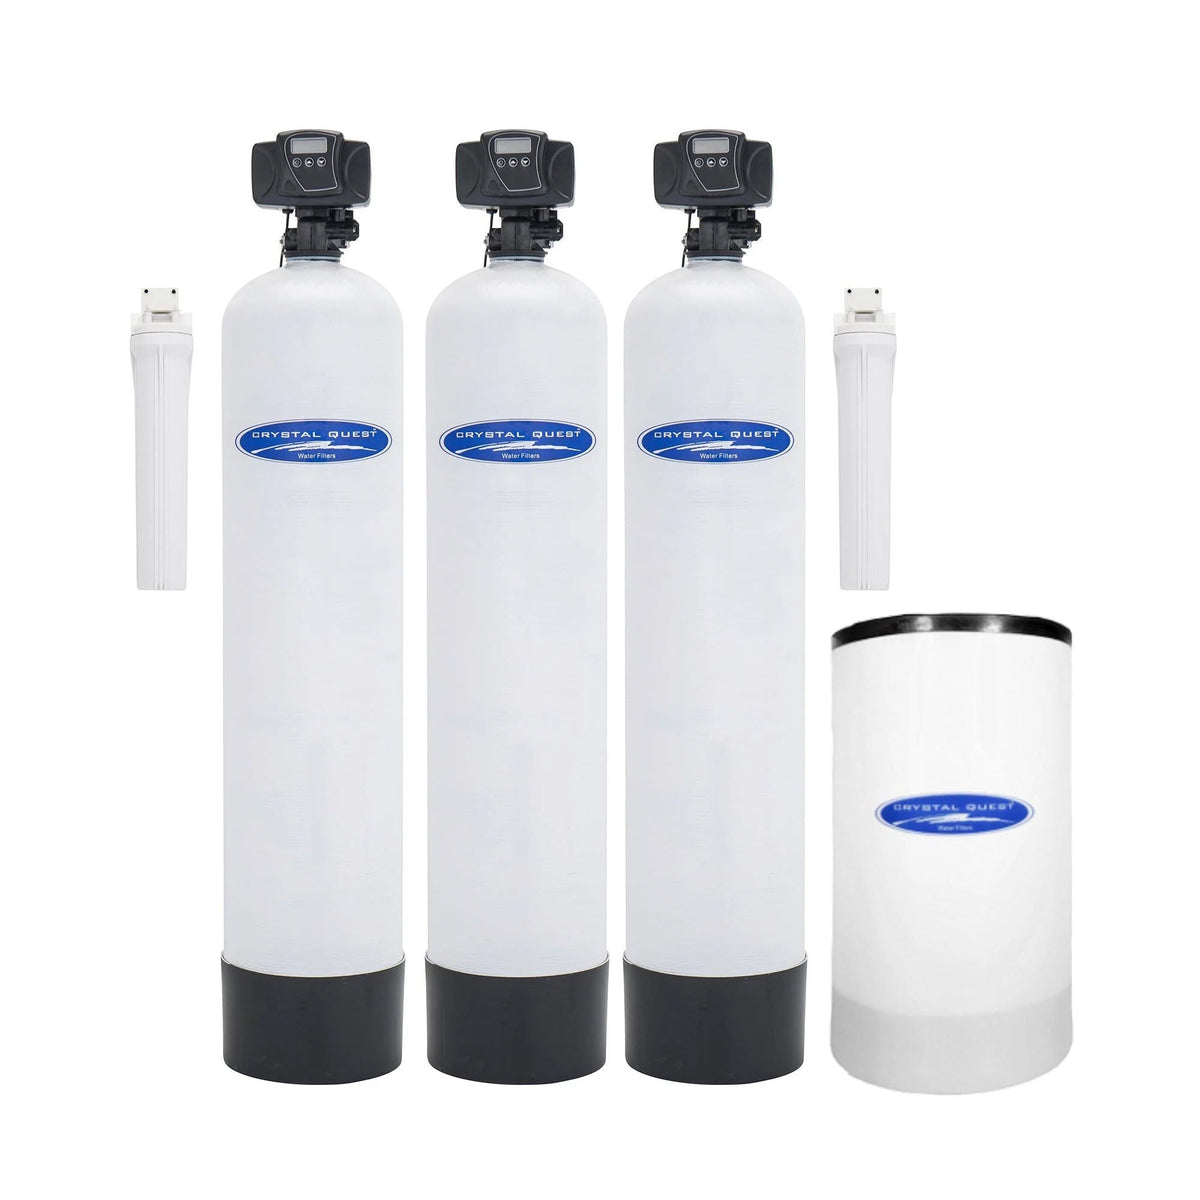 Add SMART Filter and Softener / Fiberglass / 1.5 Tannin Whole House Water Filter - Whole House Water Filters - Crystal Quest